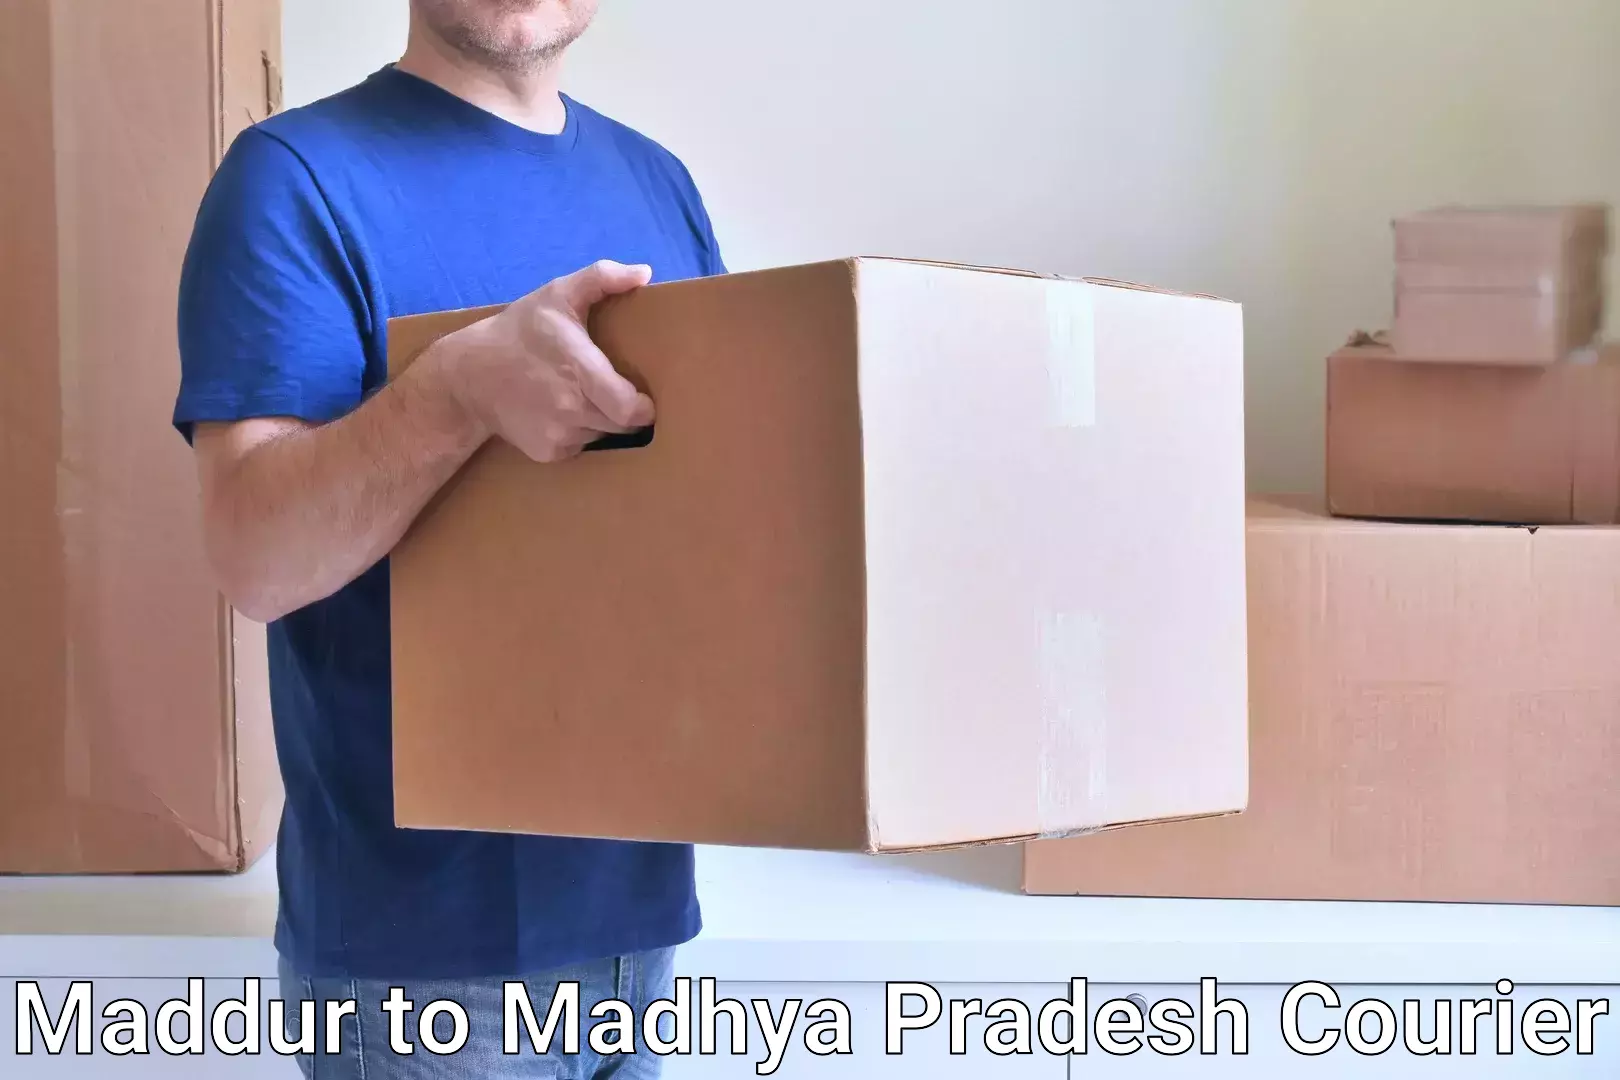 Professional courier handling Maddur to Madhya Pradesh